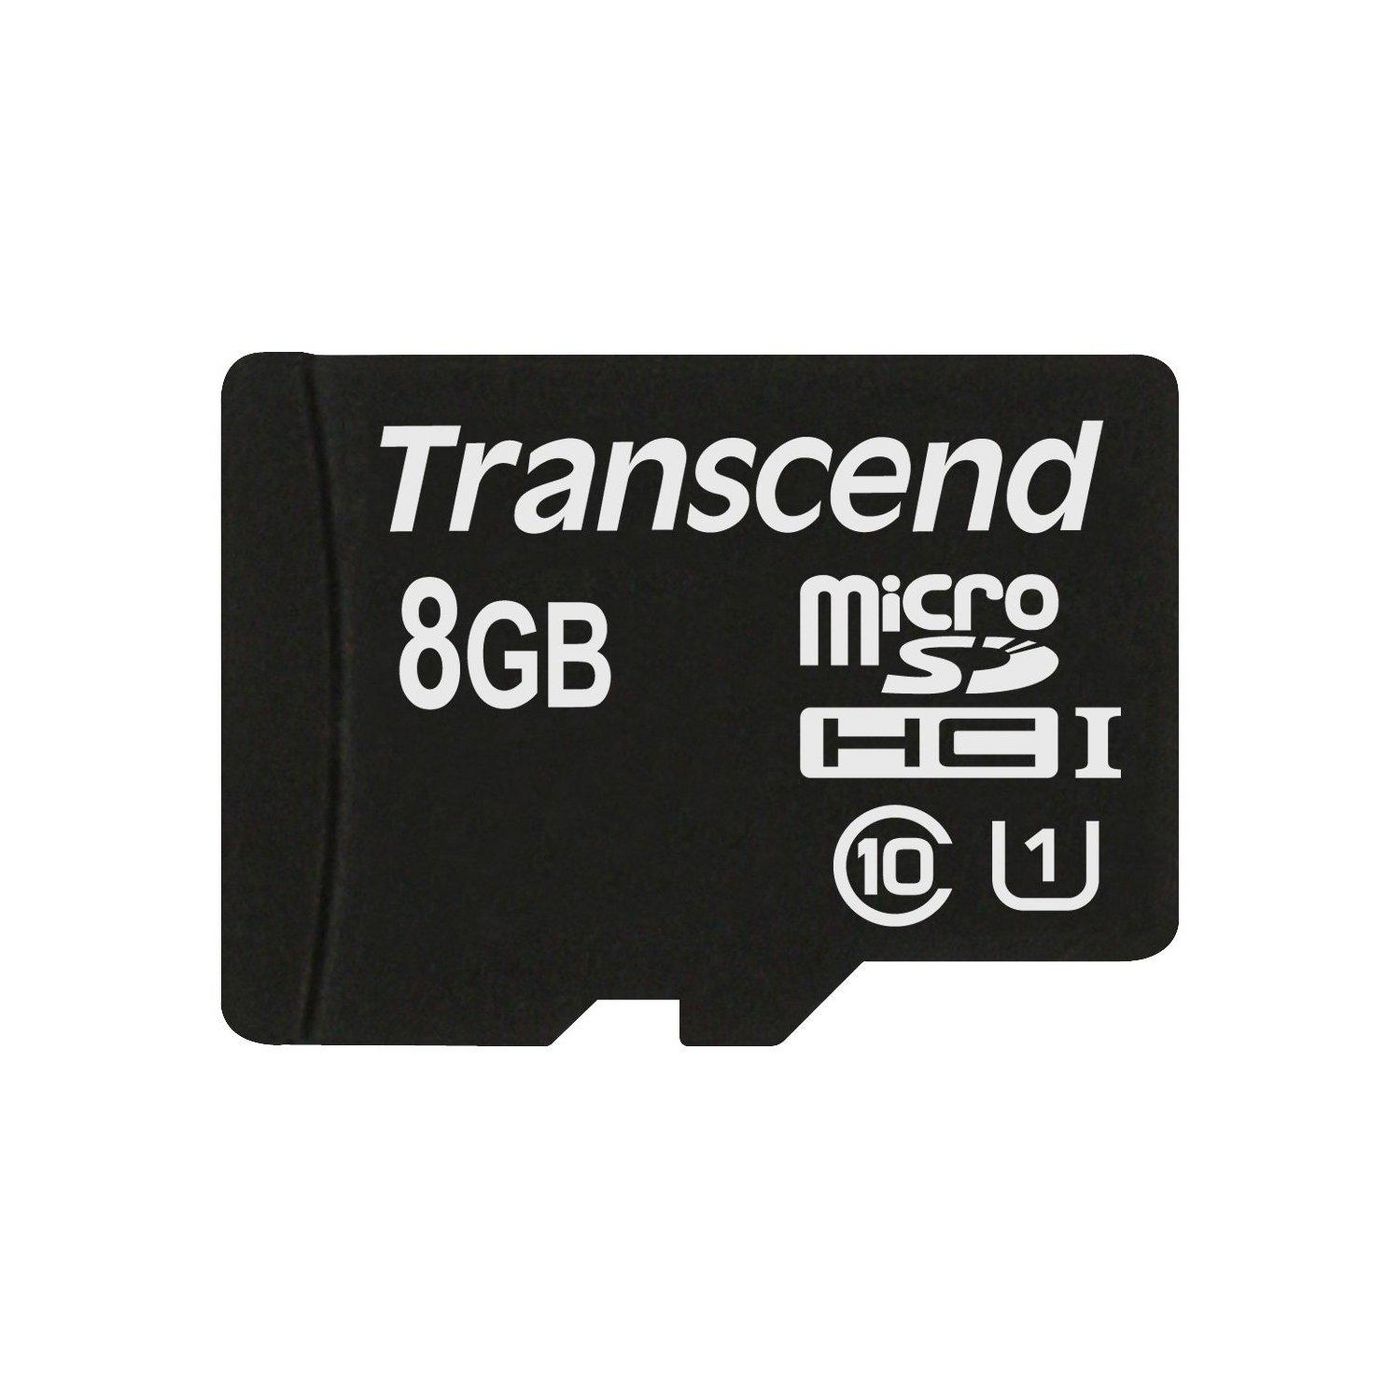 Transcend TS8GUSDCU1 8GB MICROSDHC CLASS 10 UHS-I 